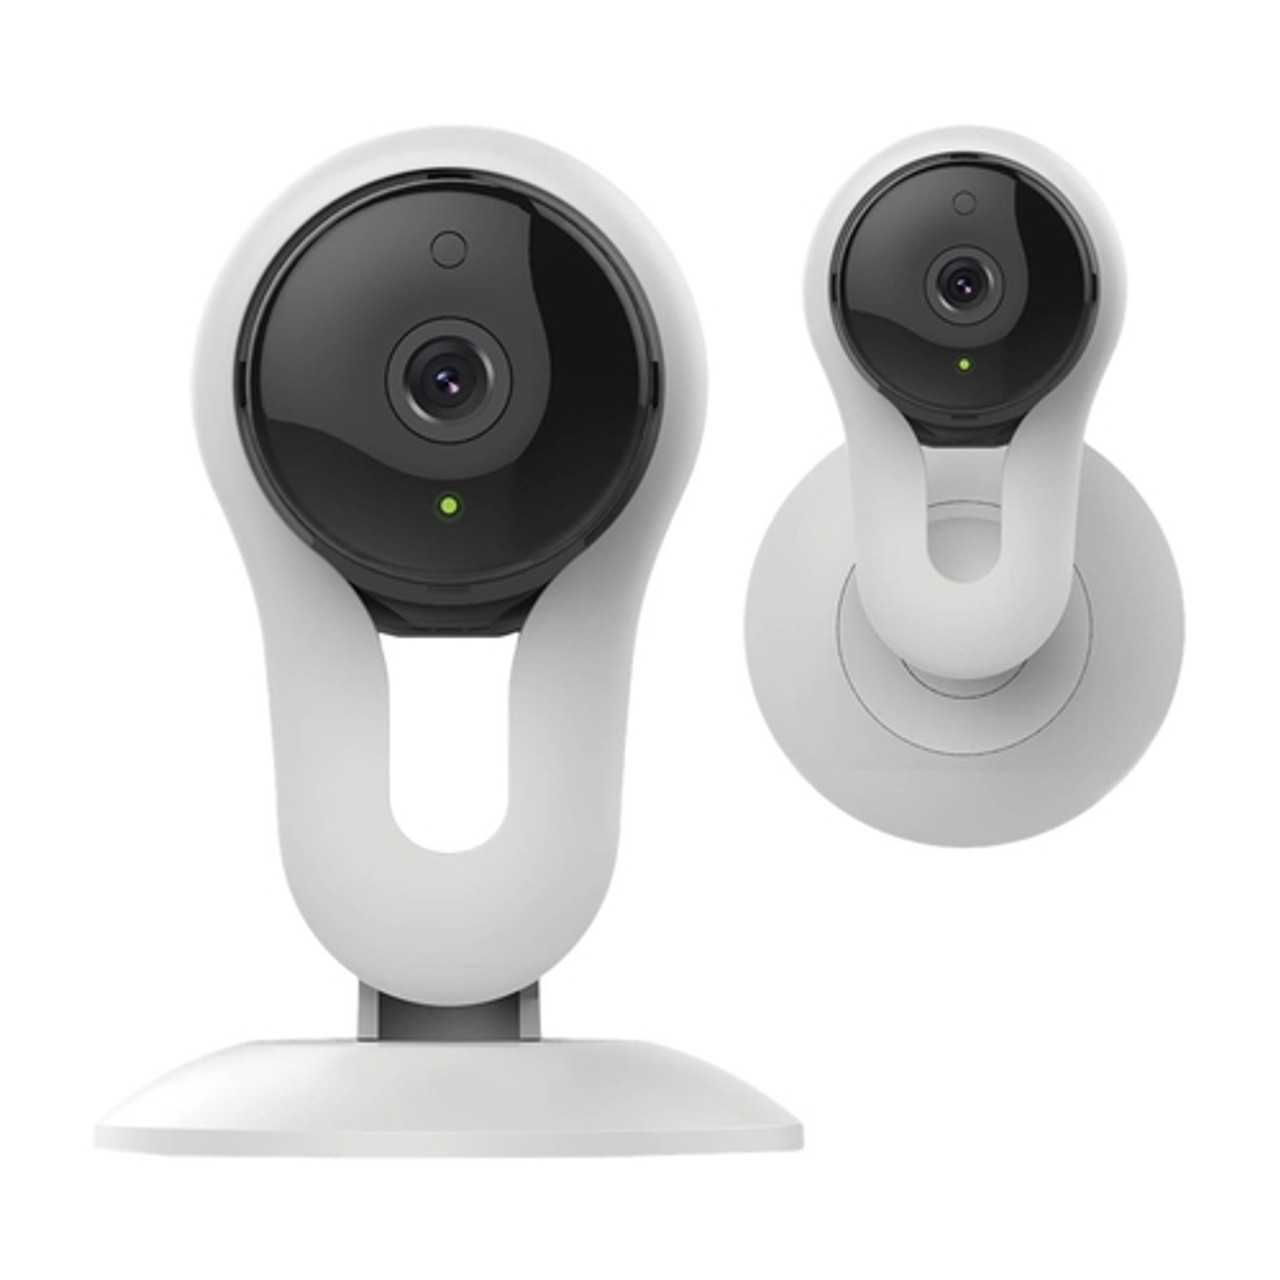 Geeni - Aware Indoor Wi-Fi Wireless Network Surveillance Camera (2-Pack) - Black/White